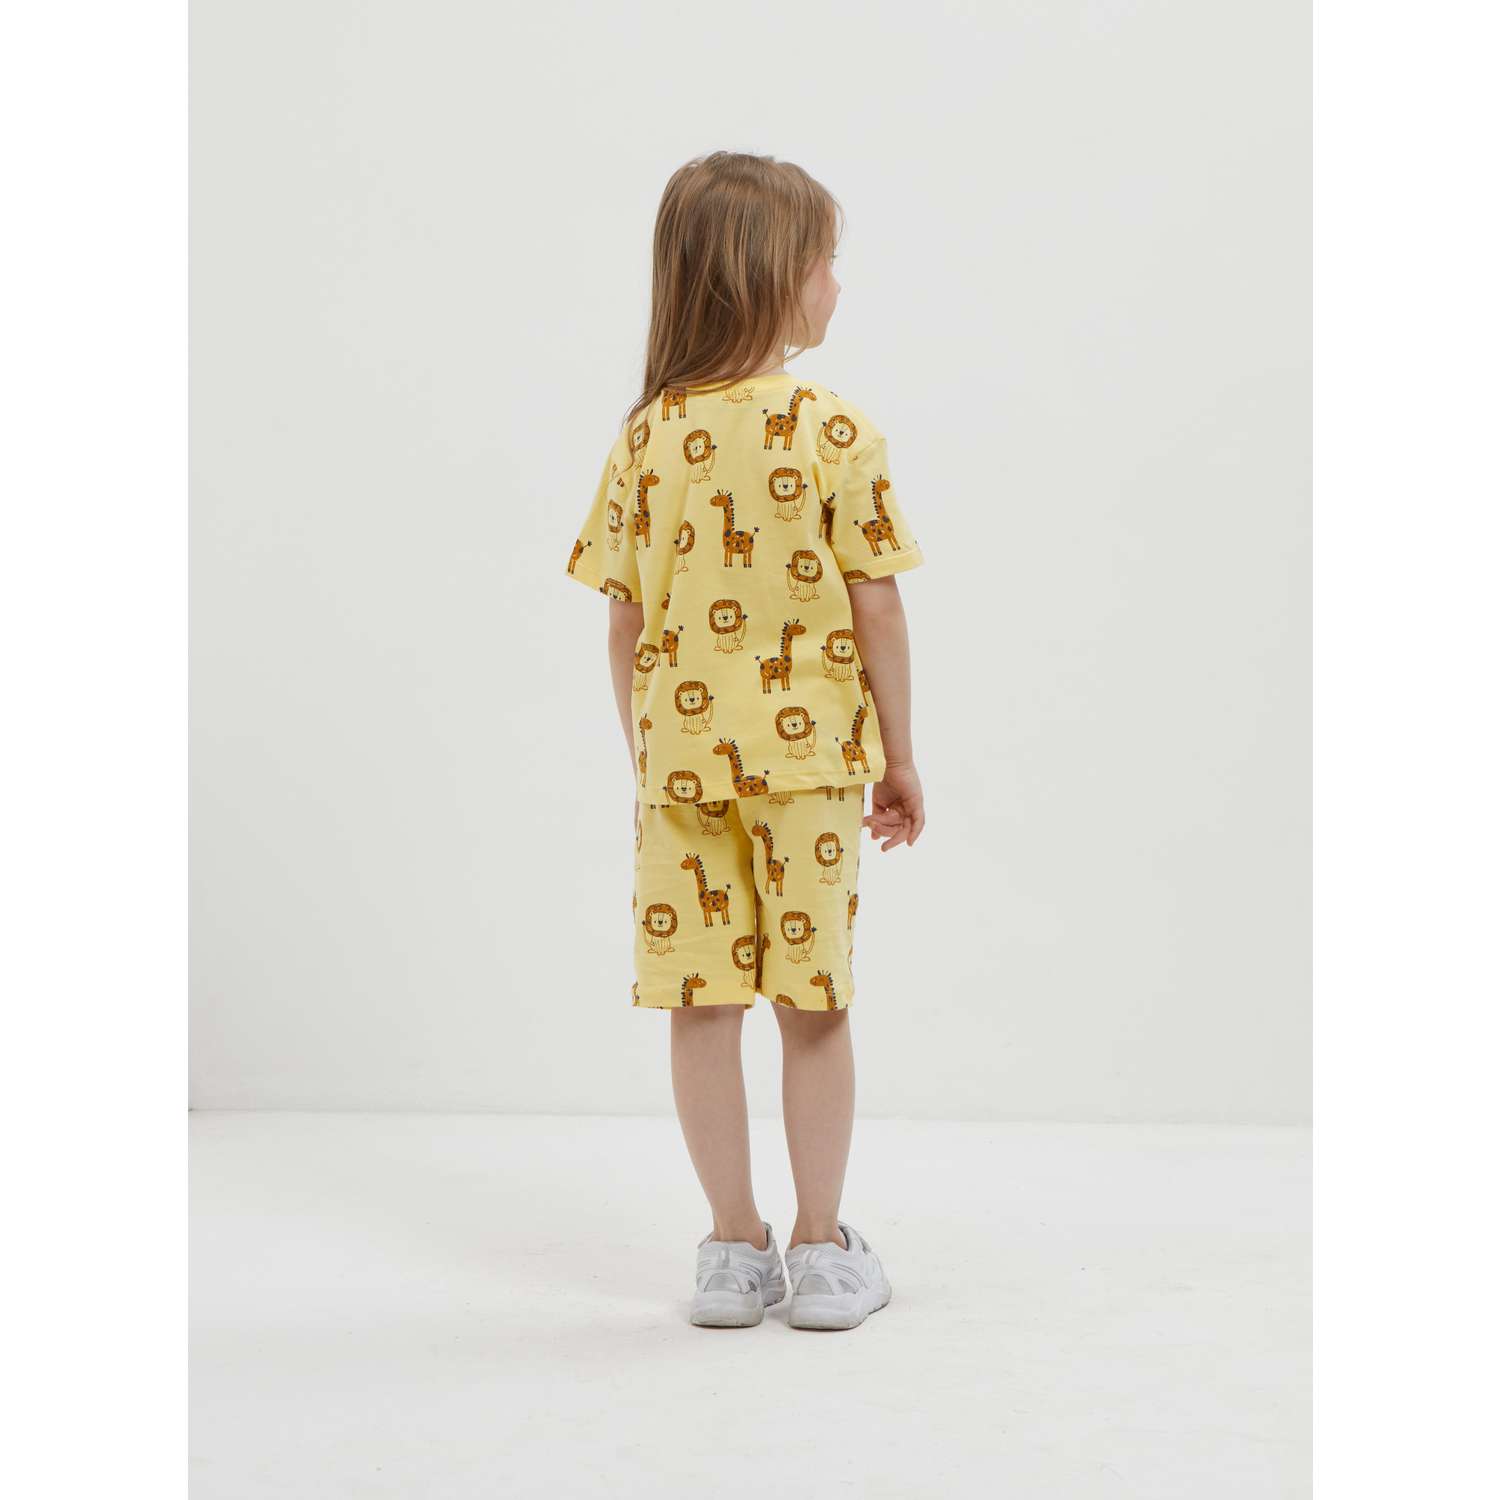 Пижама ISSHOP пижама желтая с шортами - фото 7